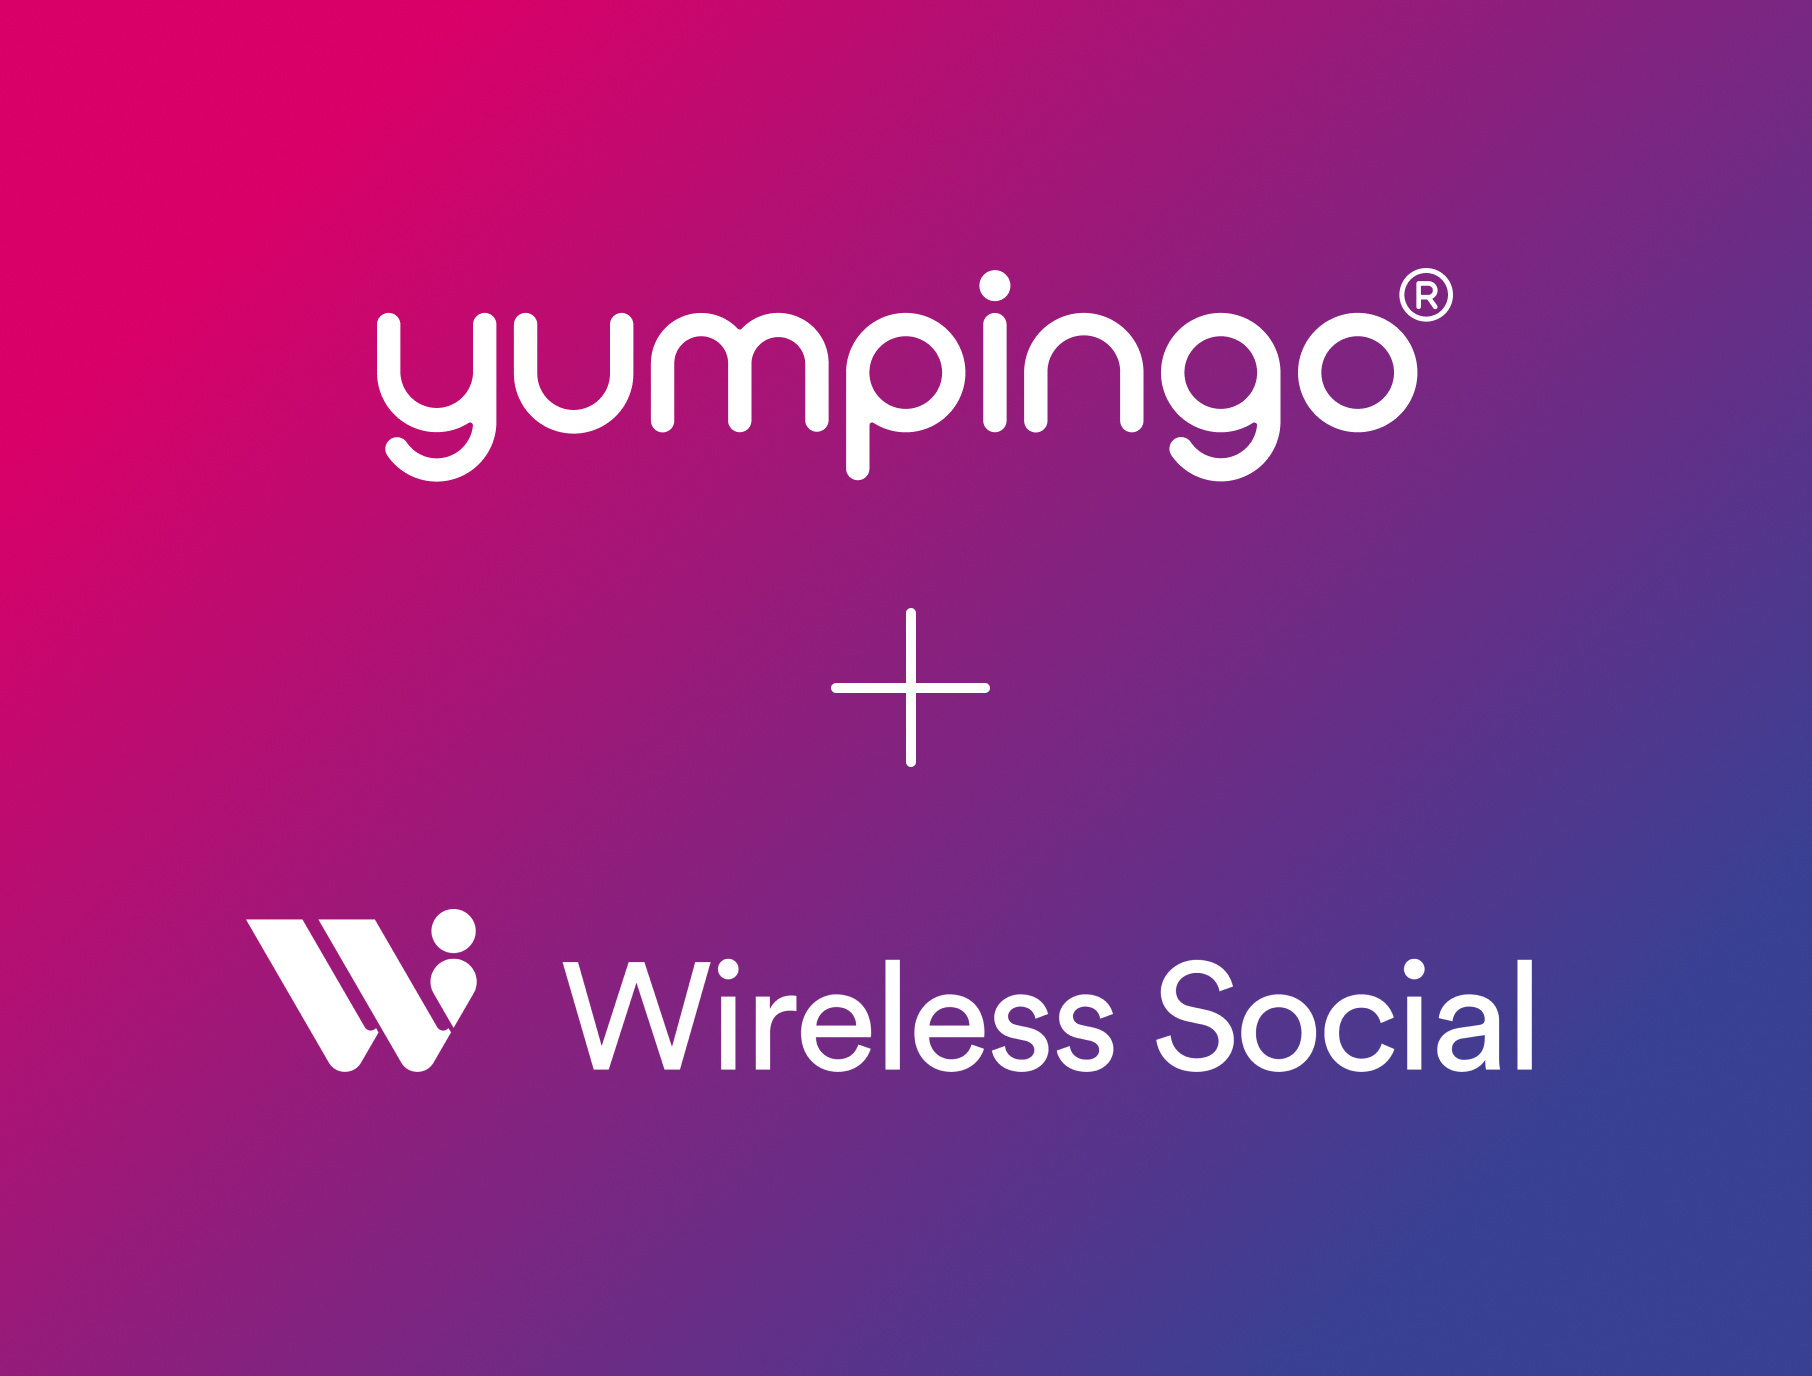 wireless social and yumpingo